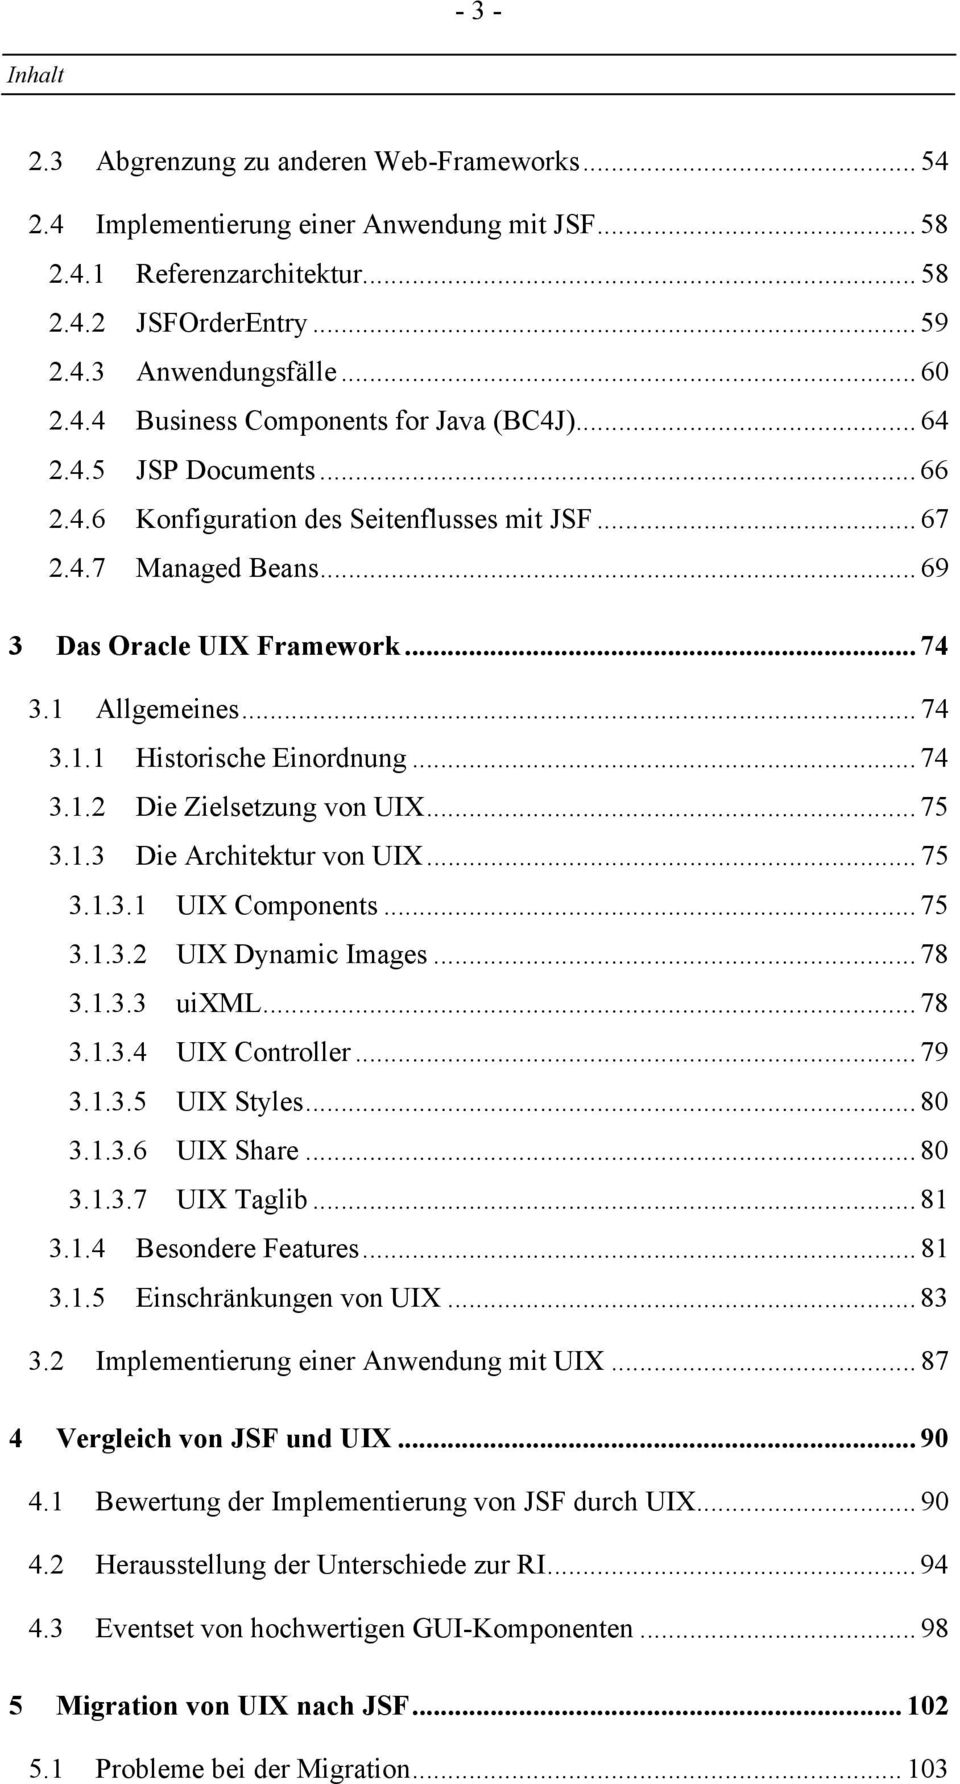 .. 75 3.1.3 Die Architektur von UIX... 75 3.1.3.1 UIX Components... 75 3.1.3.2 UIX Dynamic Images... 78 3.1.3.3 uixml... 78 3.1.3.4 UIX Controller... 79 3.1.3.5 UIX Styles... 80 3.1.3.6 UIX Share.